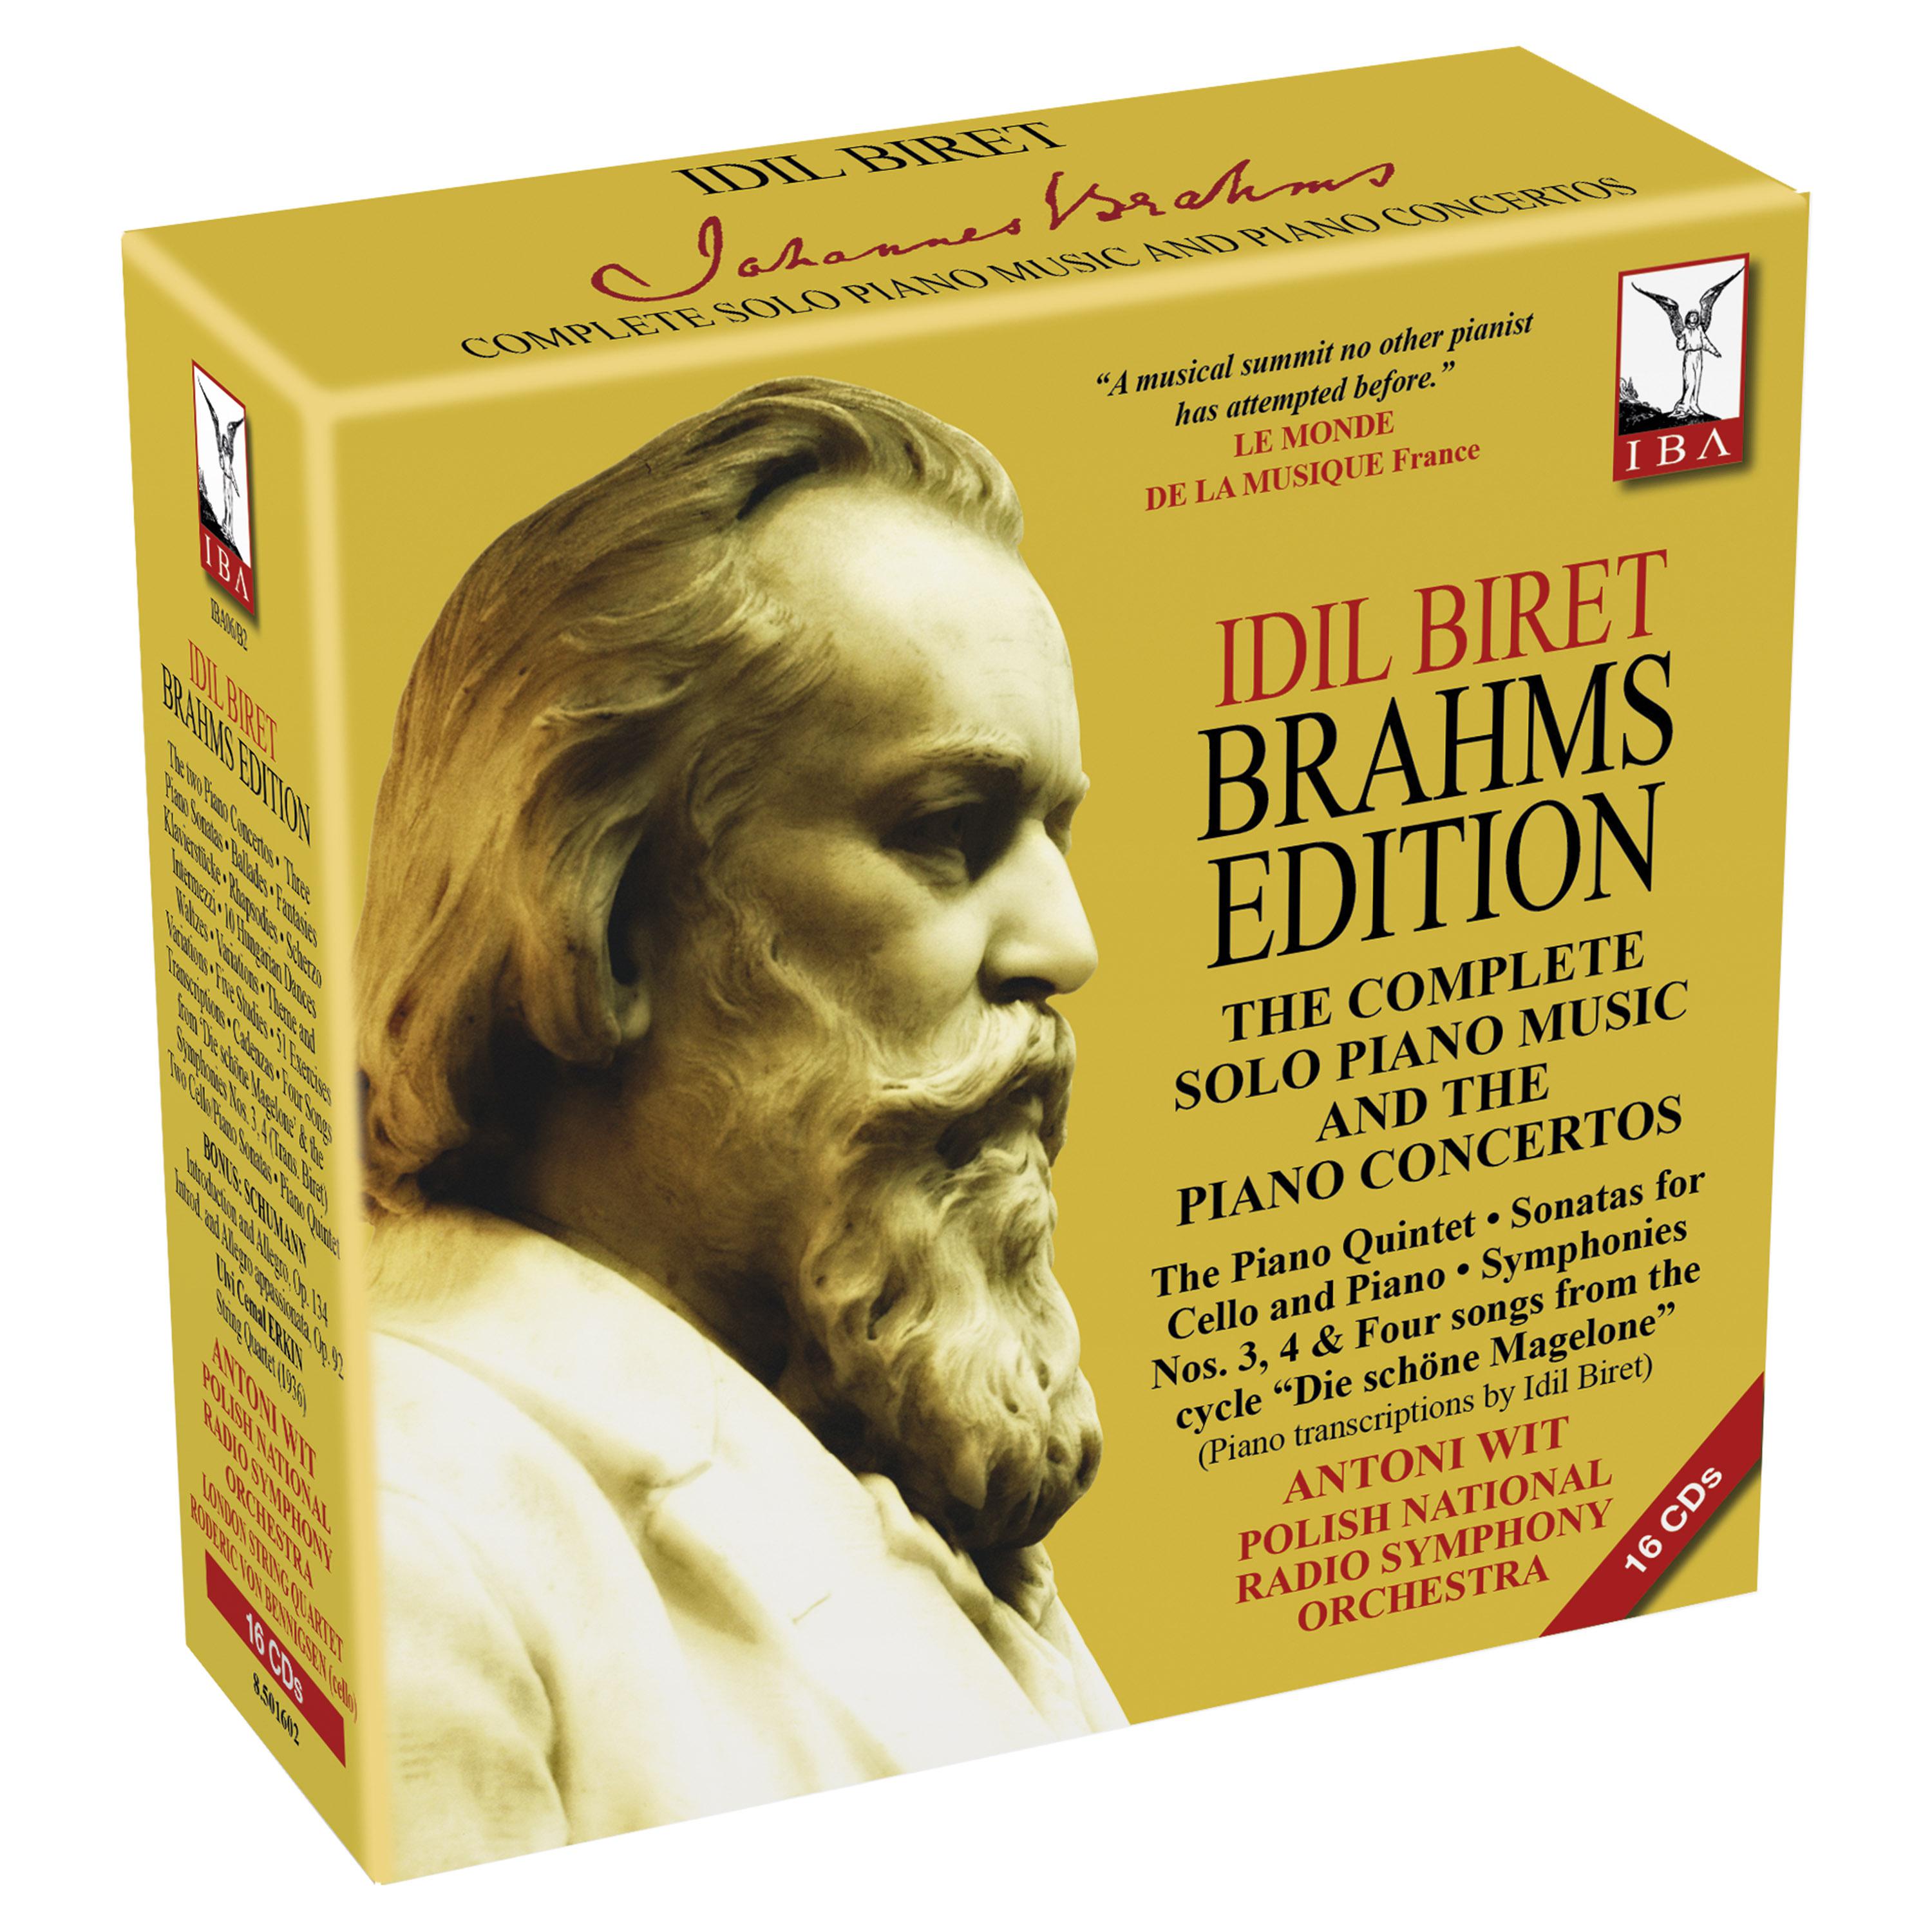 BRAHMS, J.: Solo Piano Music and Piano Concertos (Complete) (Idil Biret Brahms Edition) (Biret, Polish National Radio Symphony, Wit) (16-CD Box Set)